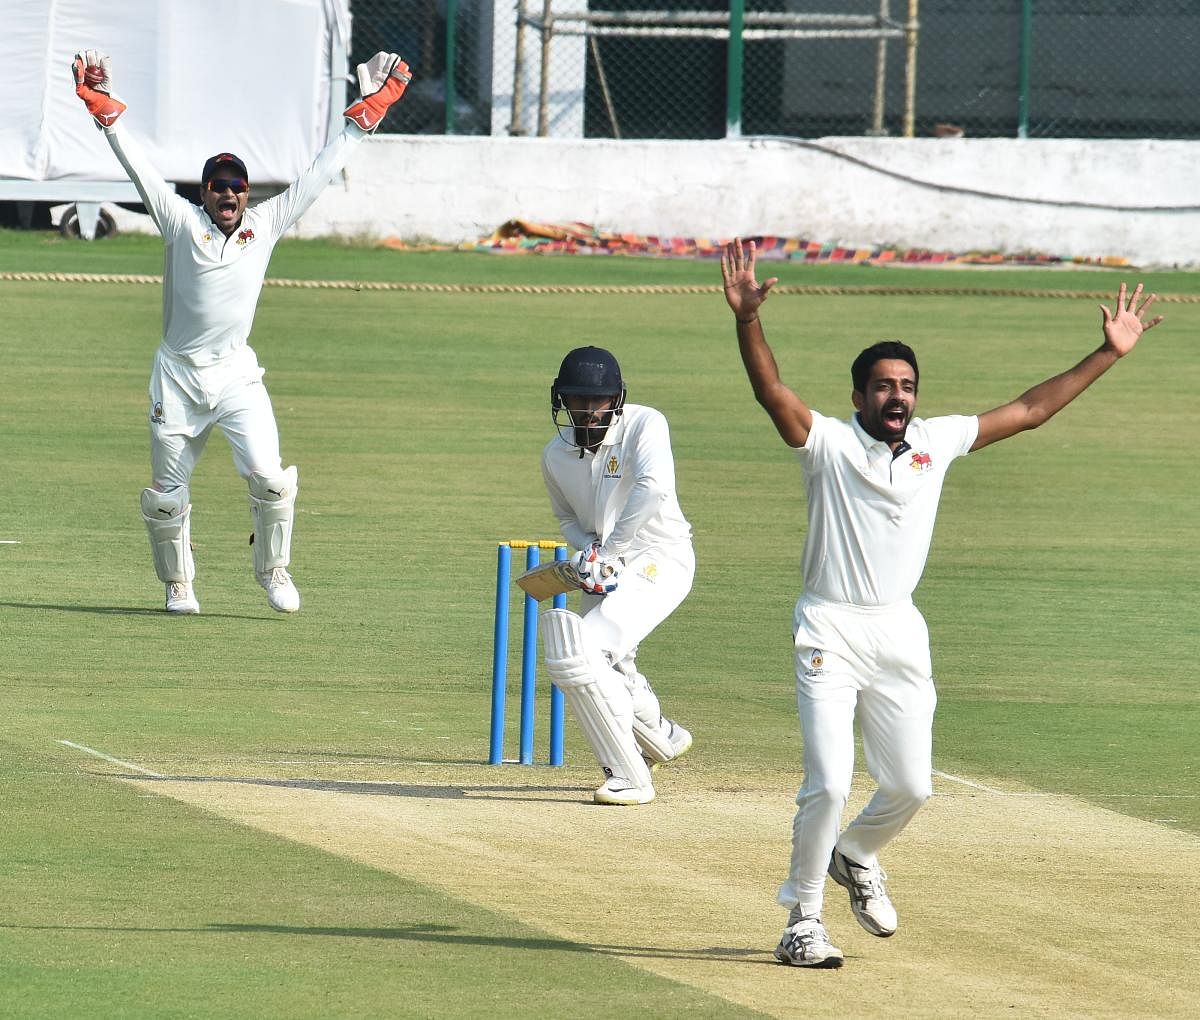 Mumbai's Dhawal Kulkarni appeals for the wicket of Karnataka's Shreyas Gopal on the second day of their Ranji Trophy match on Wednesday. DH photo/ Tajuddin Azad